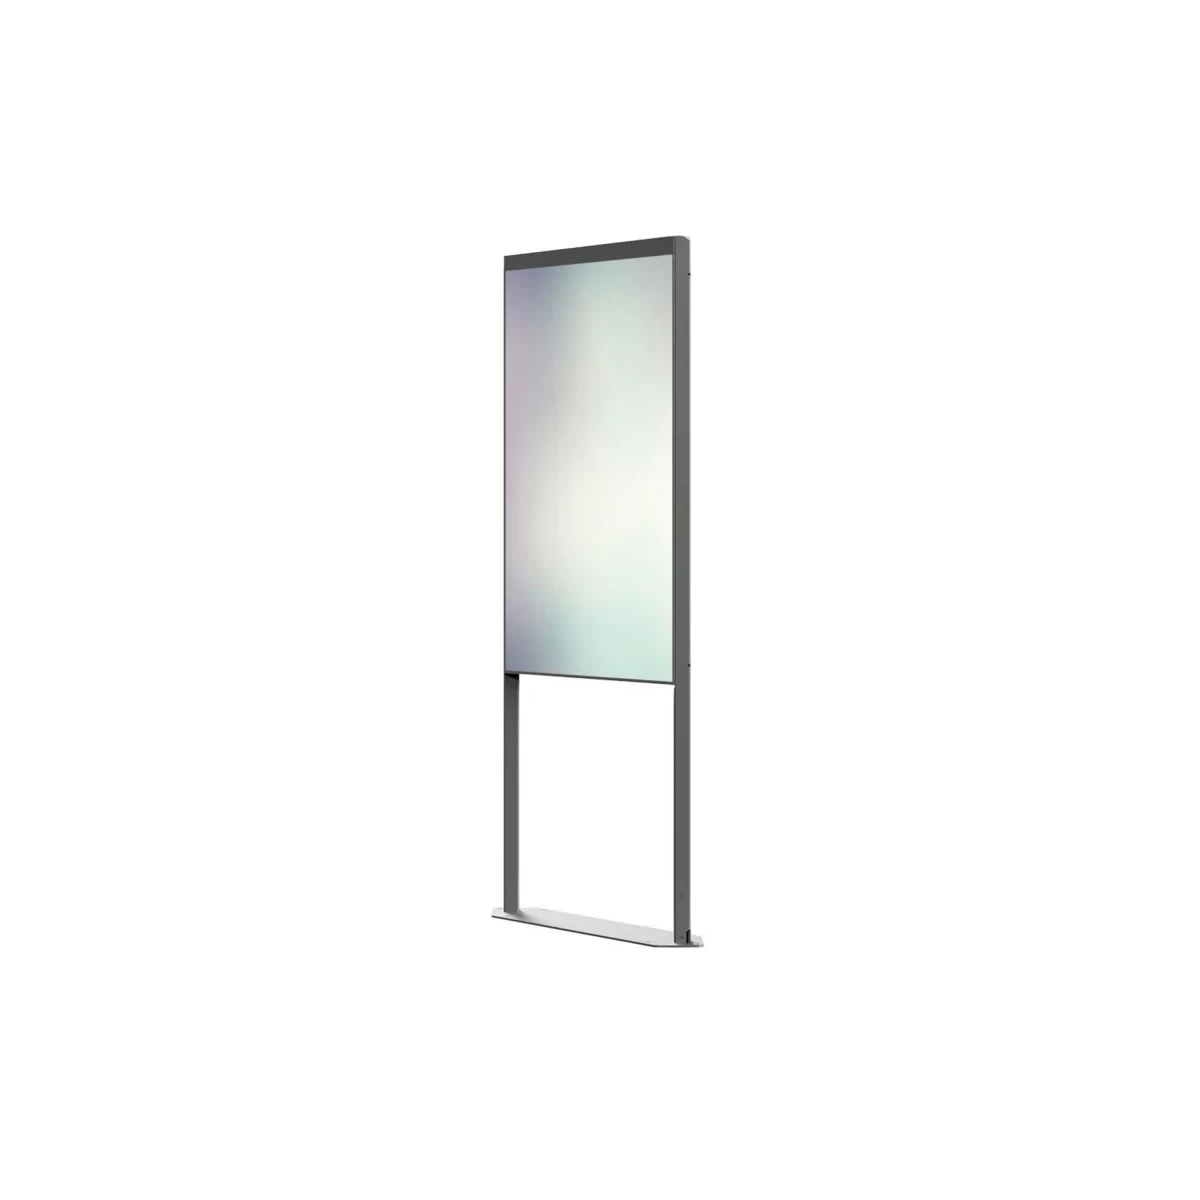 Edbak MWDF.01 Window Display Bold Down Floor Stand for Samsung QM55R (VESA mounted)